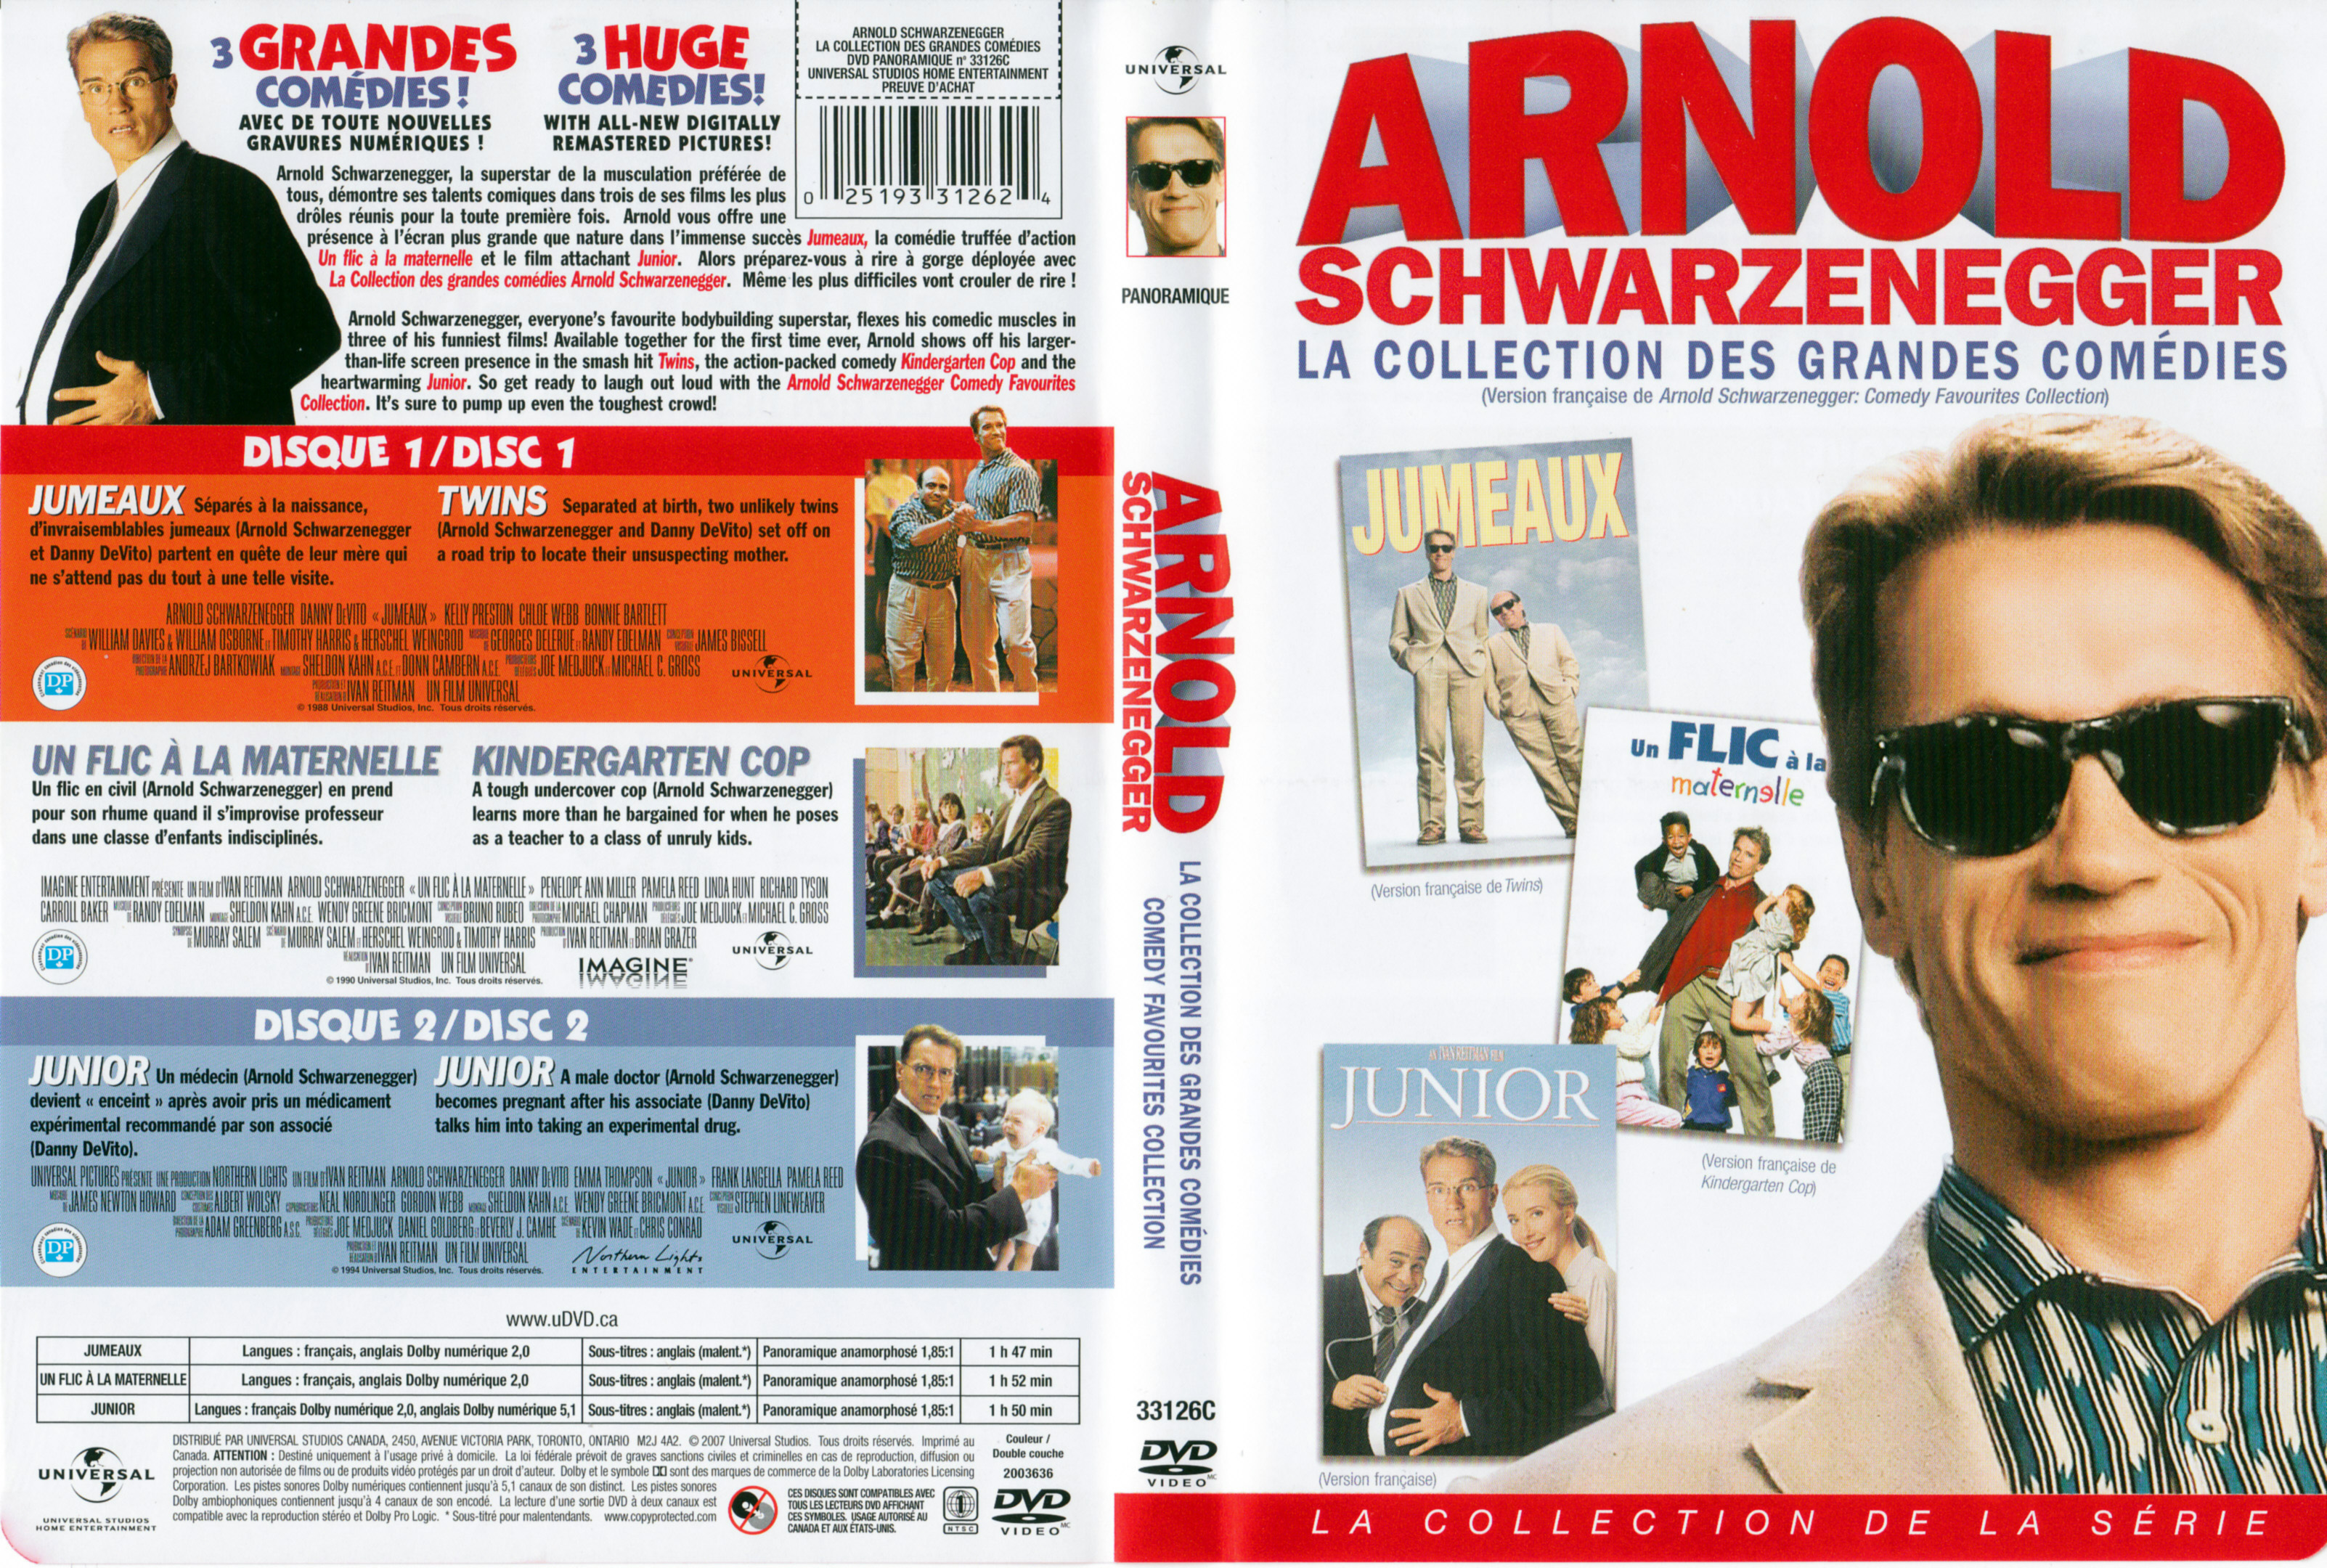 Jaquette DVD Arnold Schwarzenegger Grandes Comdies (Canadienne)